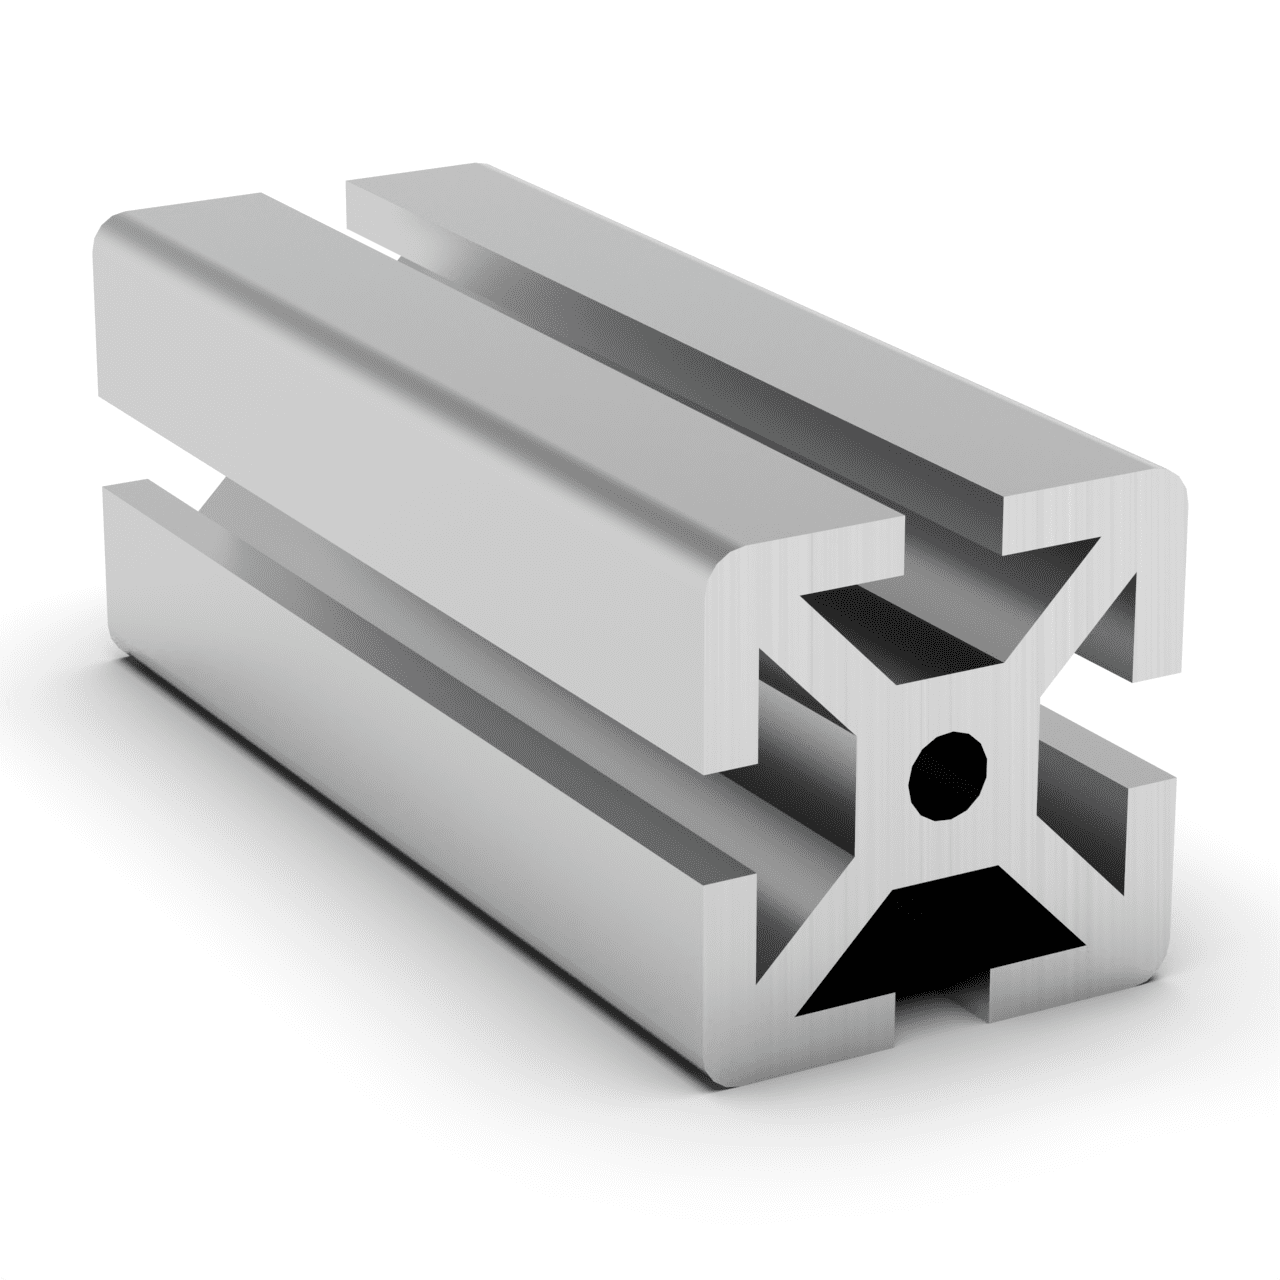 Aluminum T-slot 40x40 profile 2-hole join flat connect 80x38x6mm plate,  4-pieces